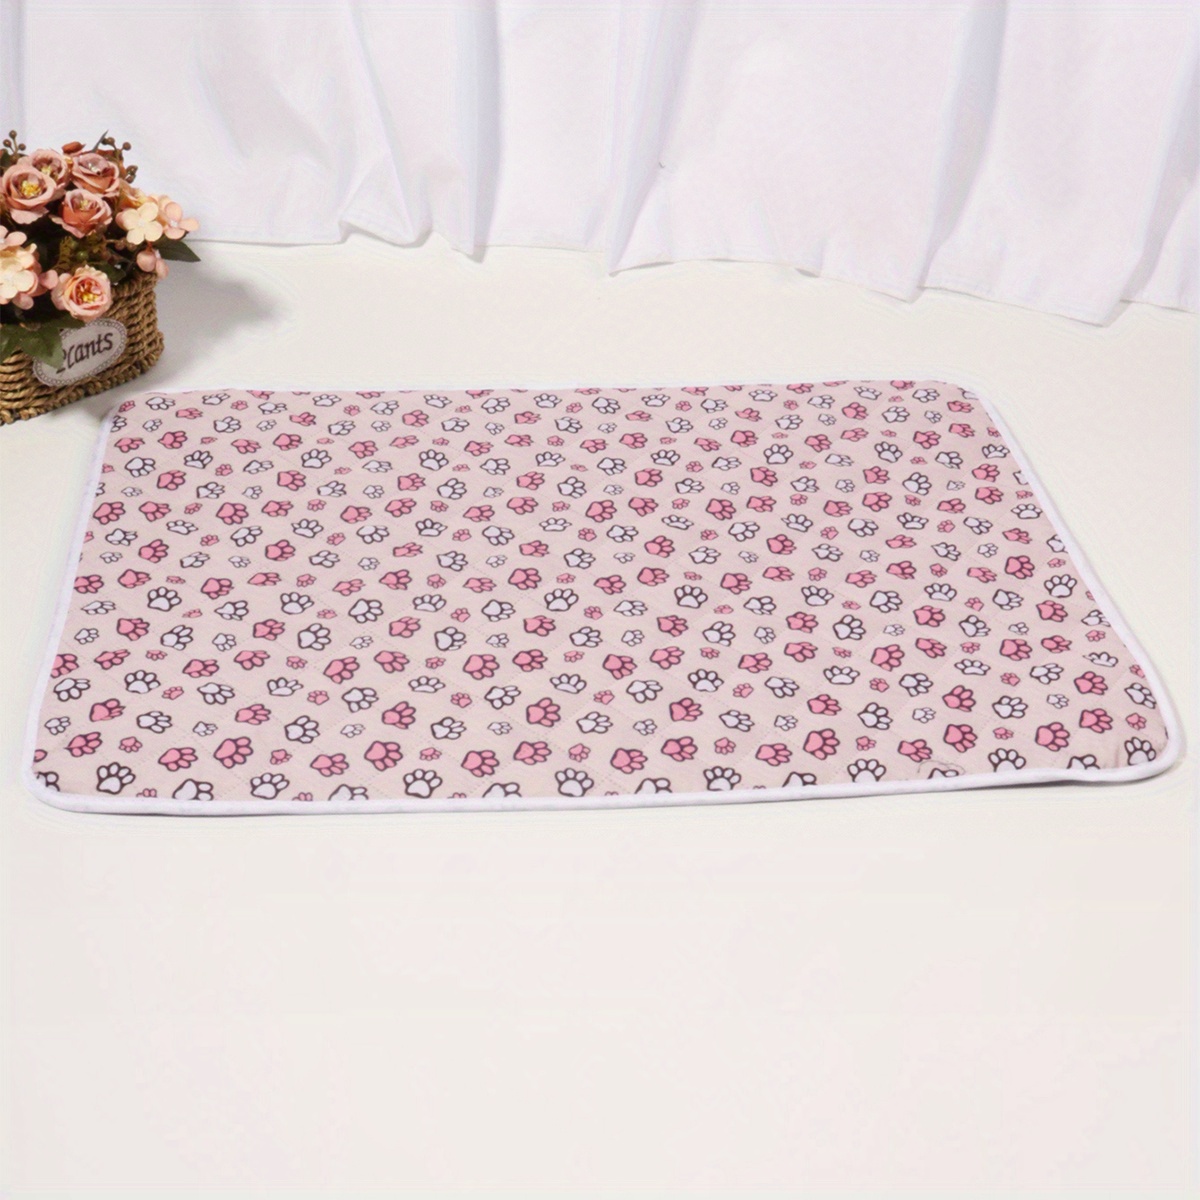 pet comfortable cooling mat with cute patterns cat and dog sleeping mat pet beds sofa cushion details 2